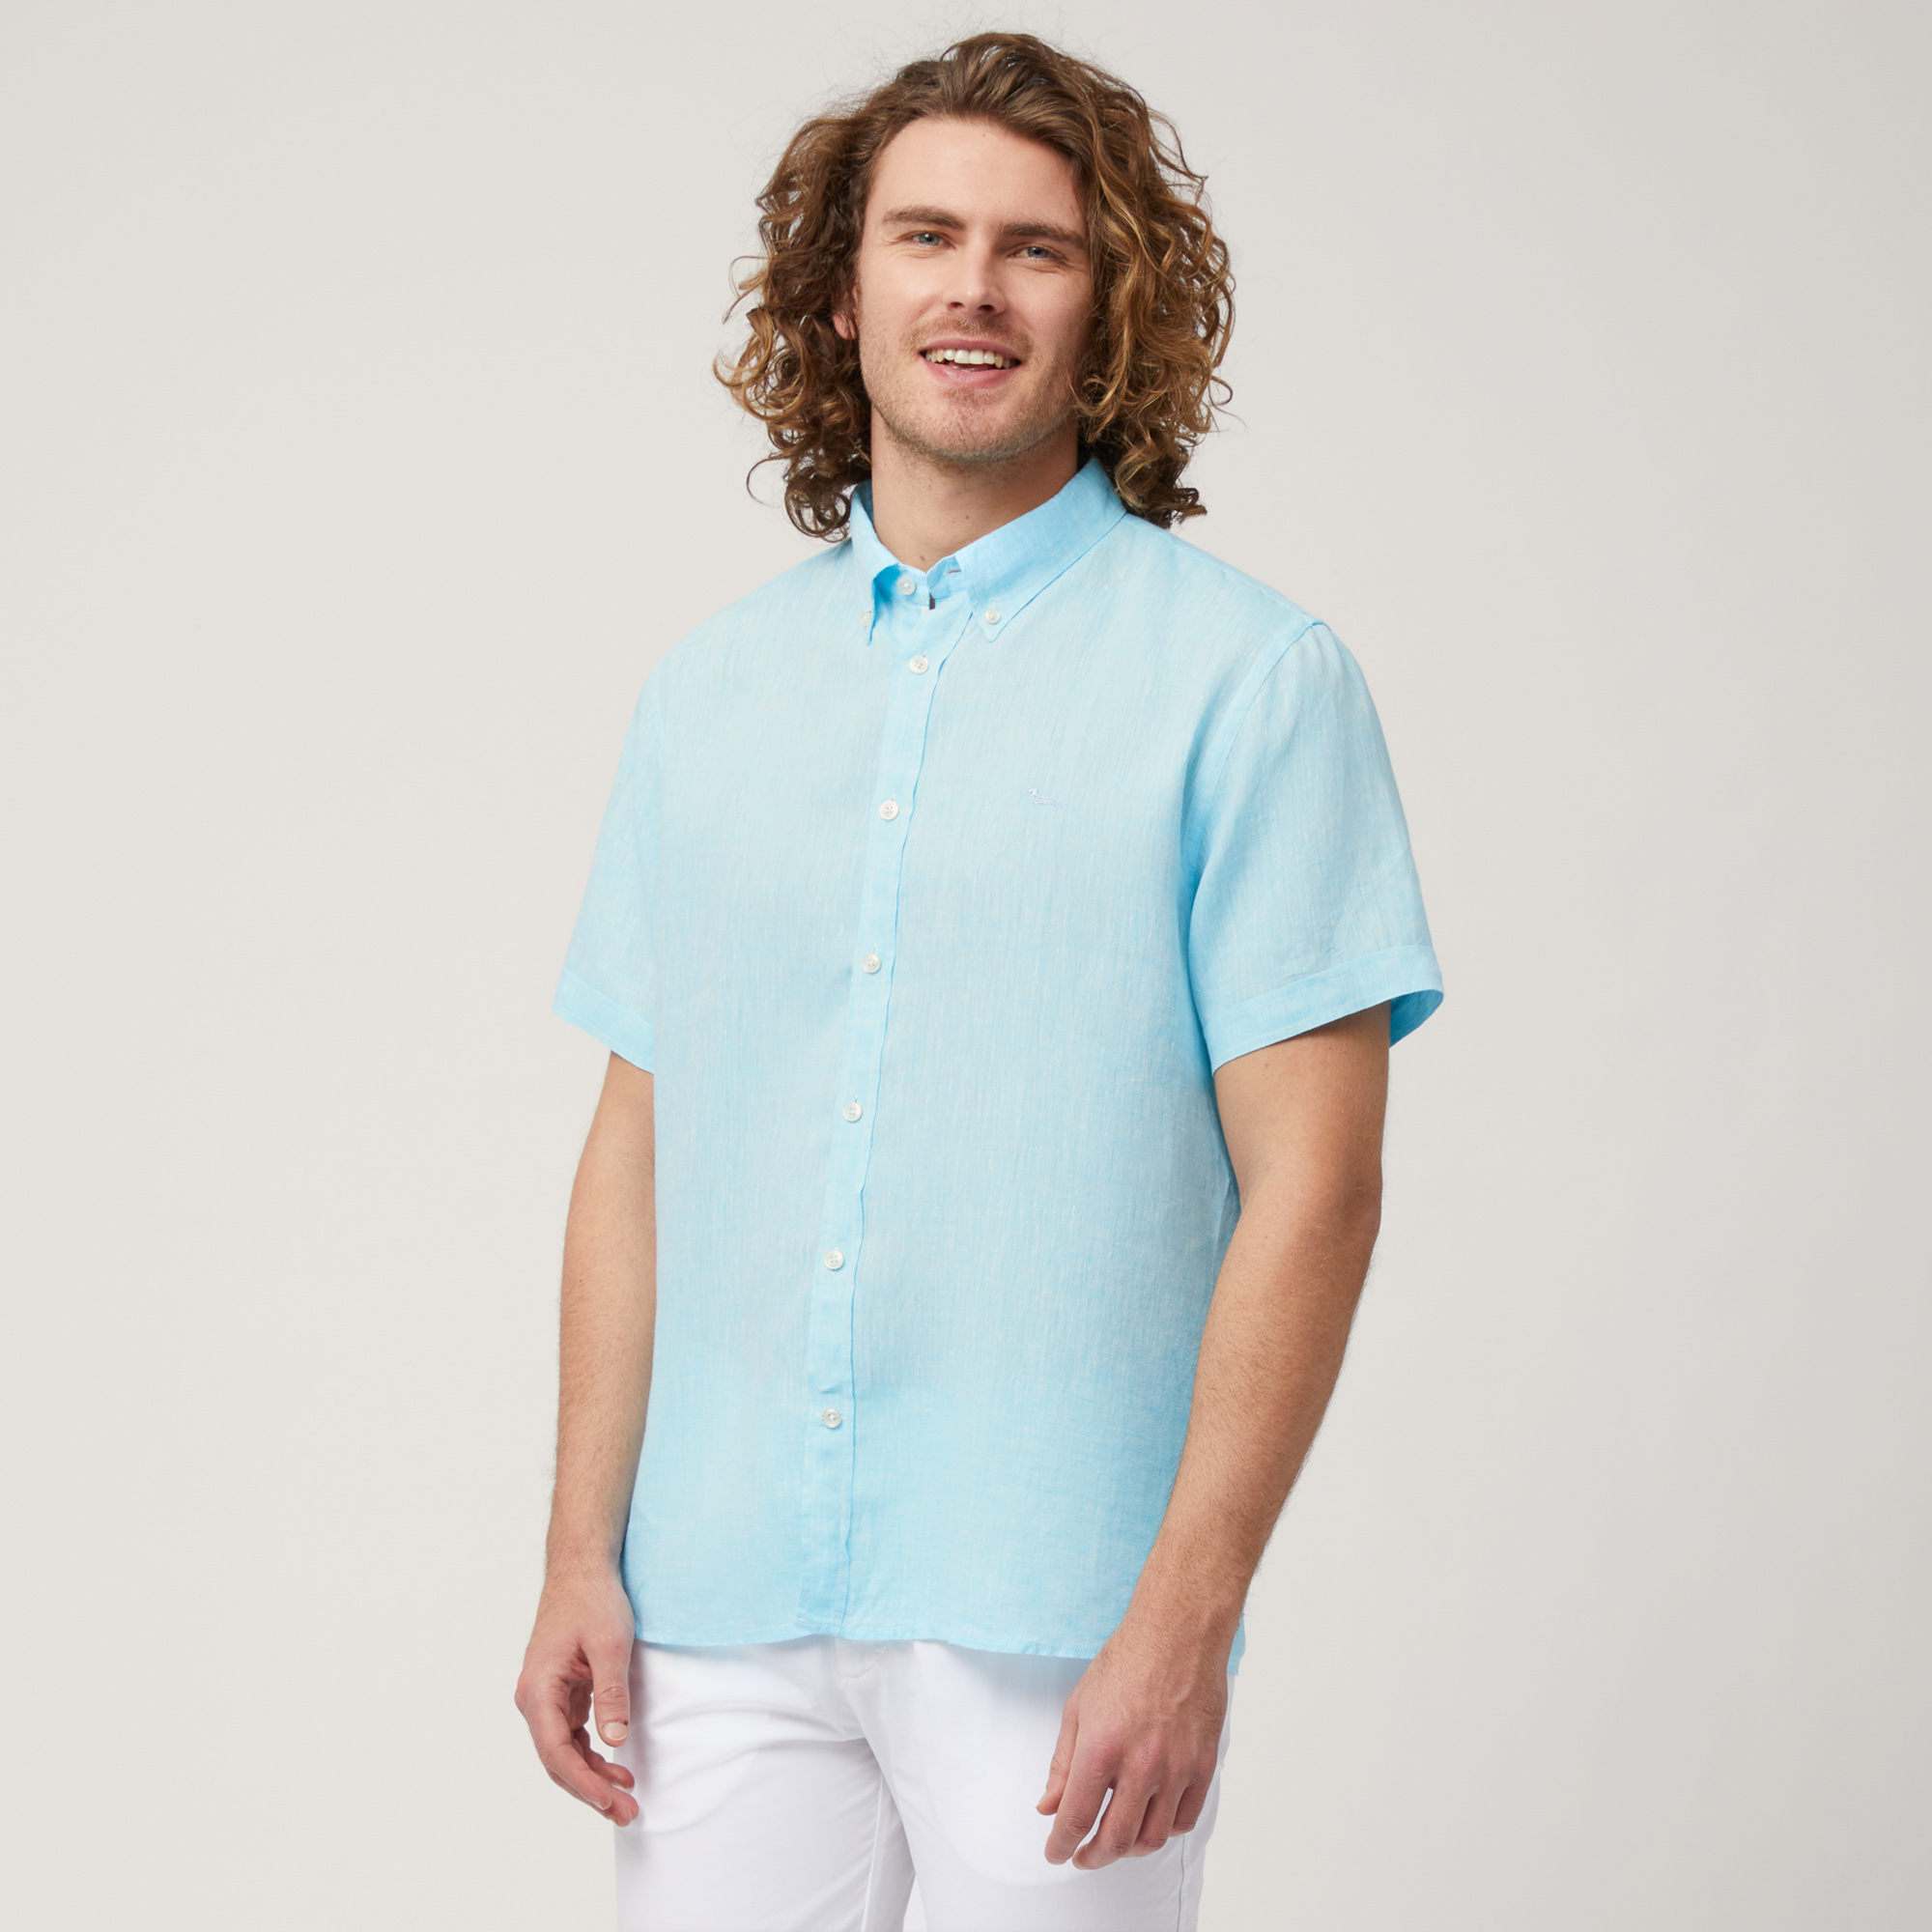 Linen Short-Sleeved Shirt, Turquoise Melange, large